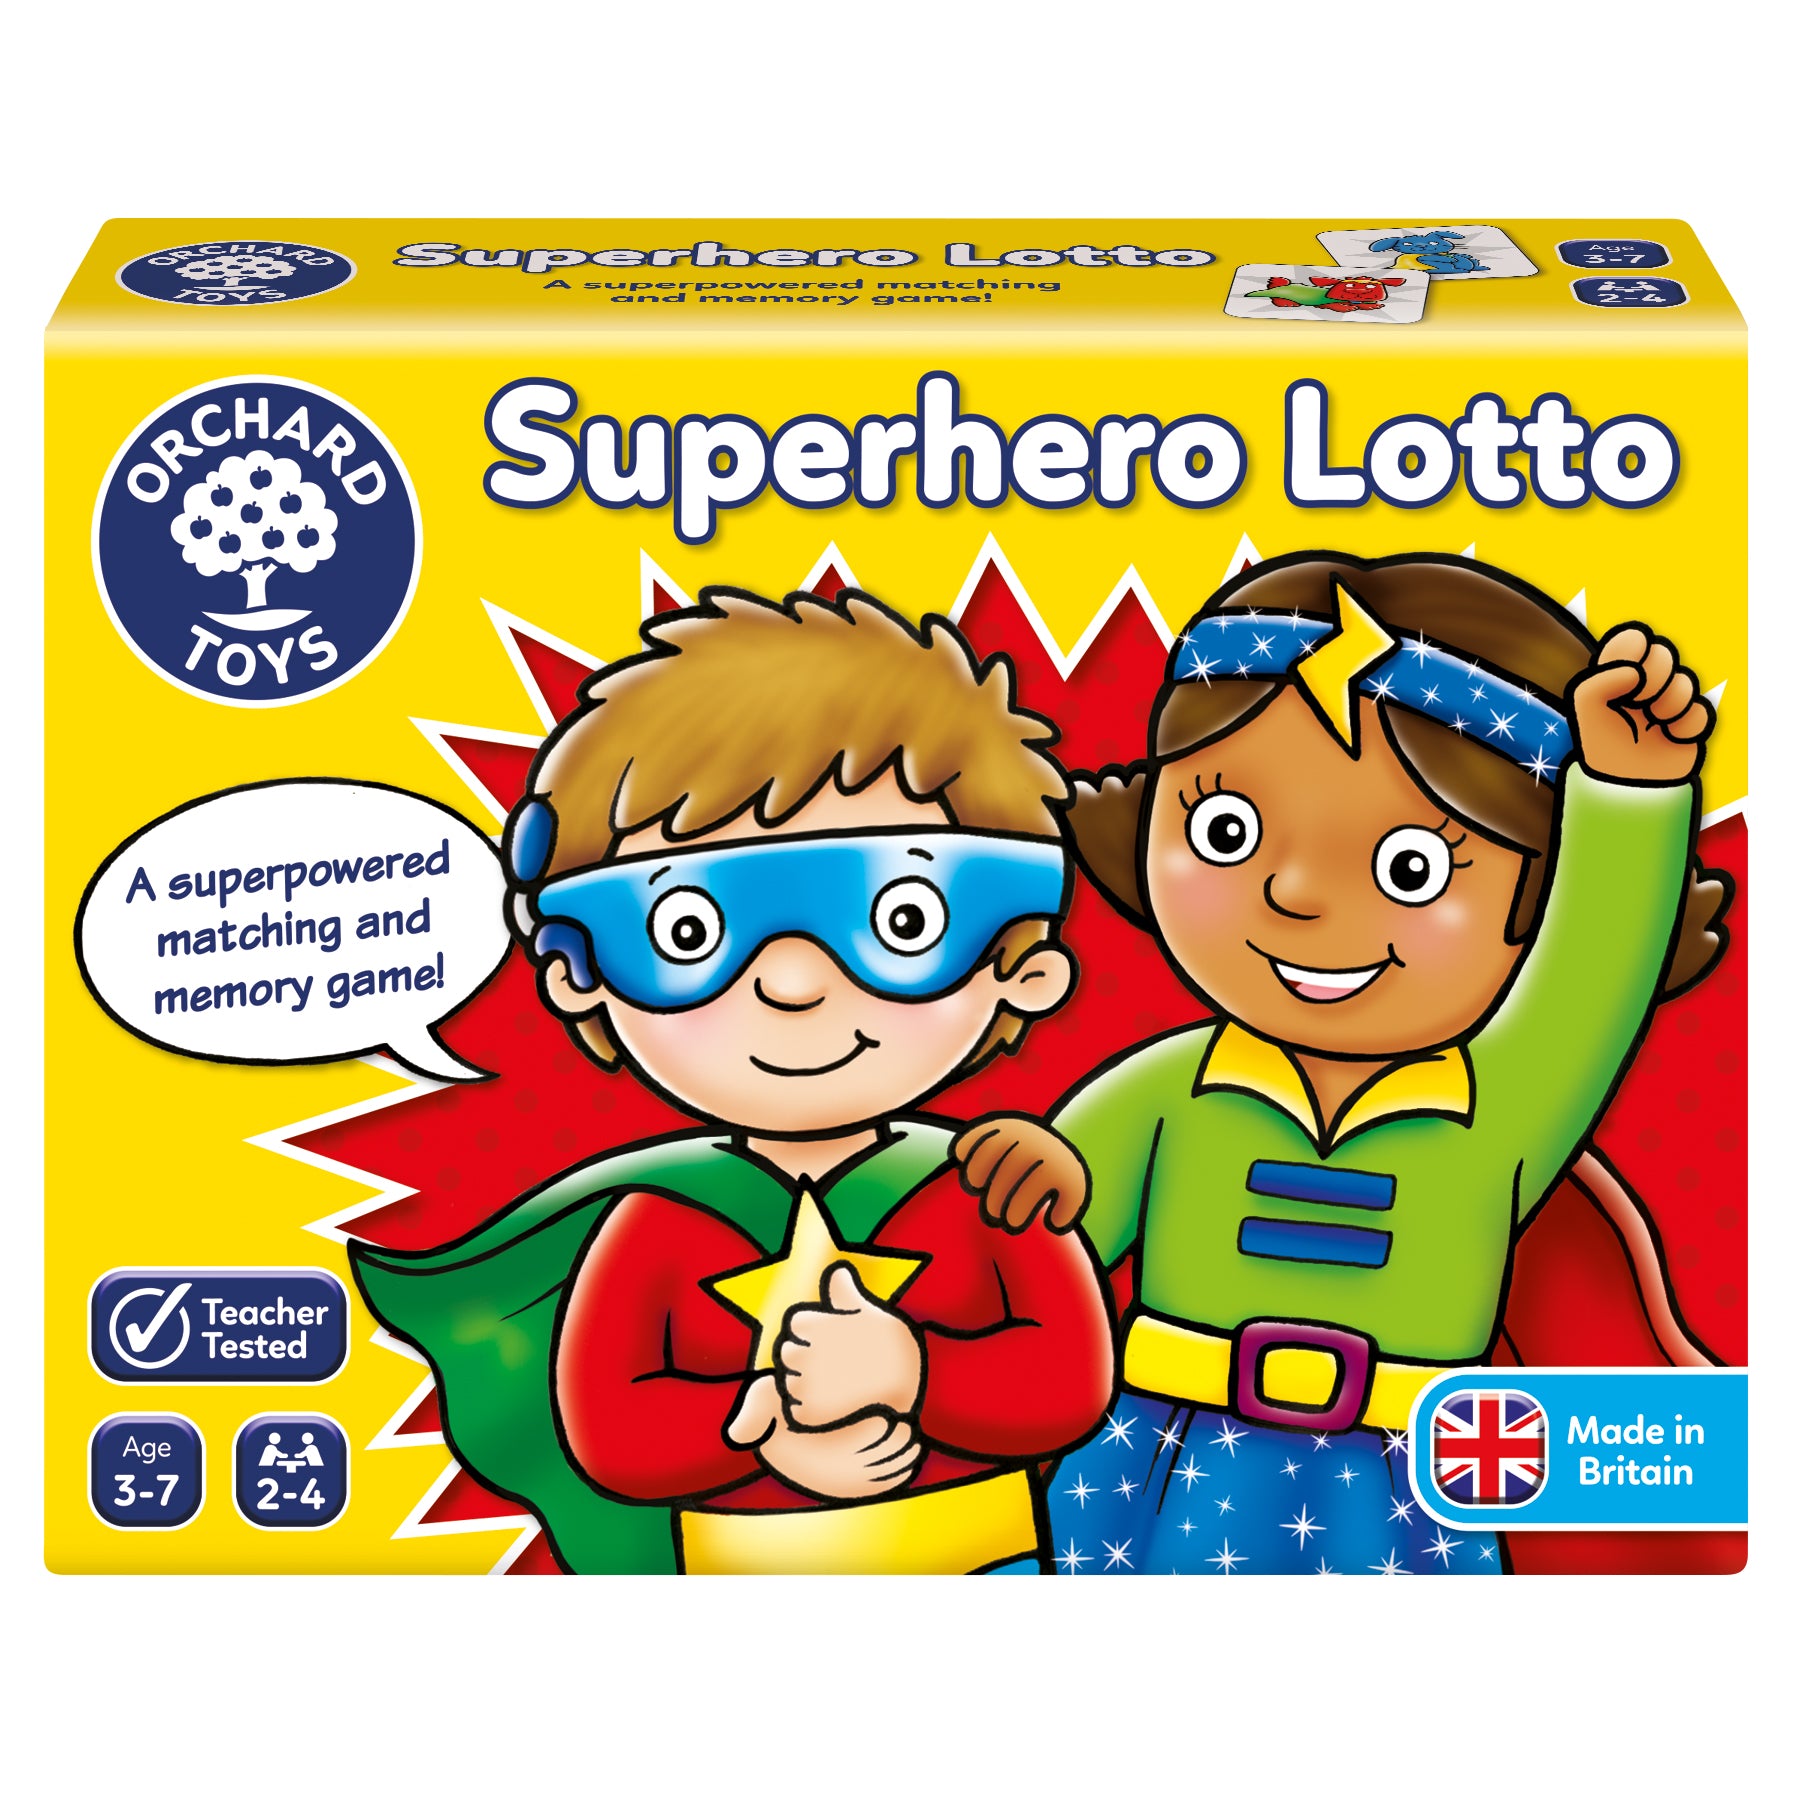 Orchard Superhero Lotto